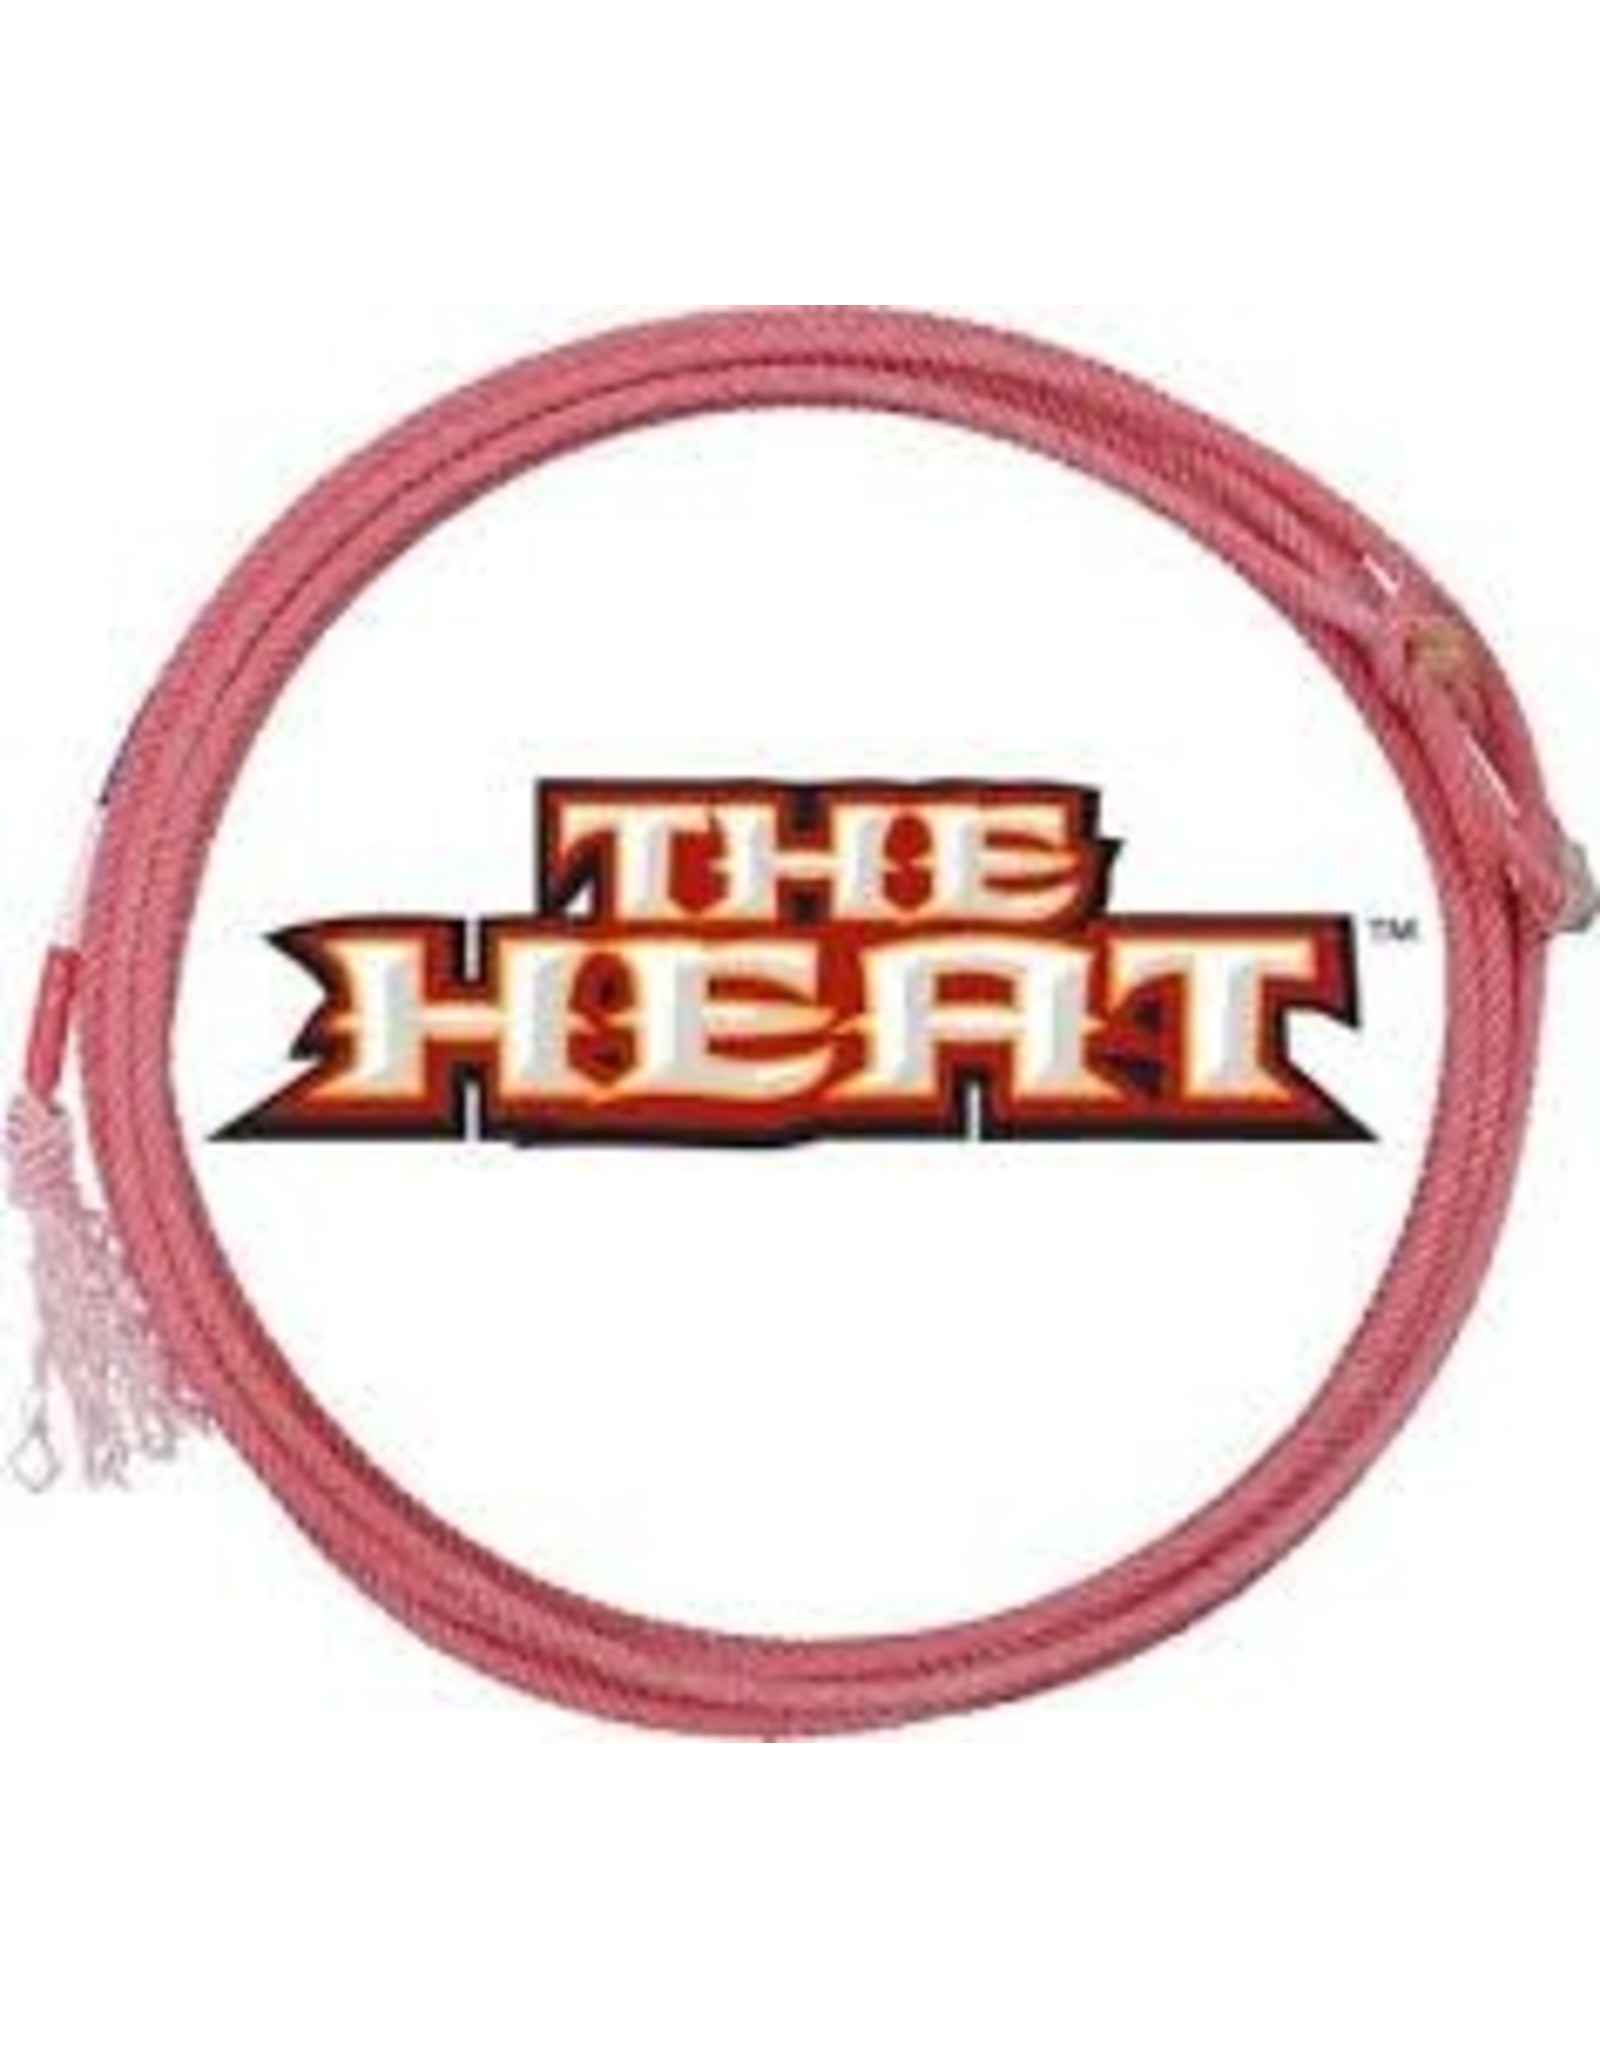 Rope - CLASSIC - Heat 30' - S Head